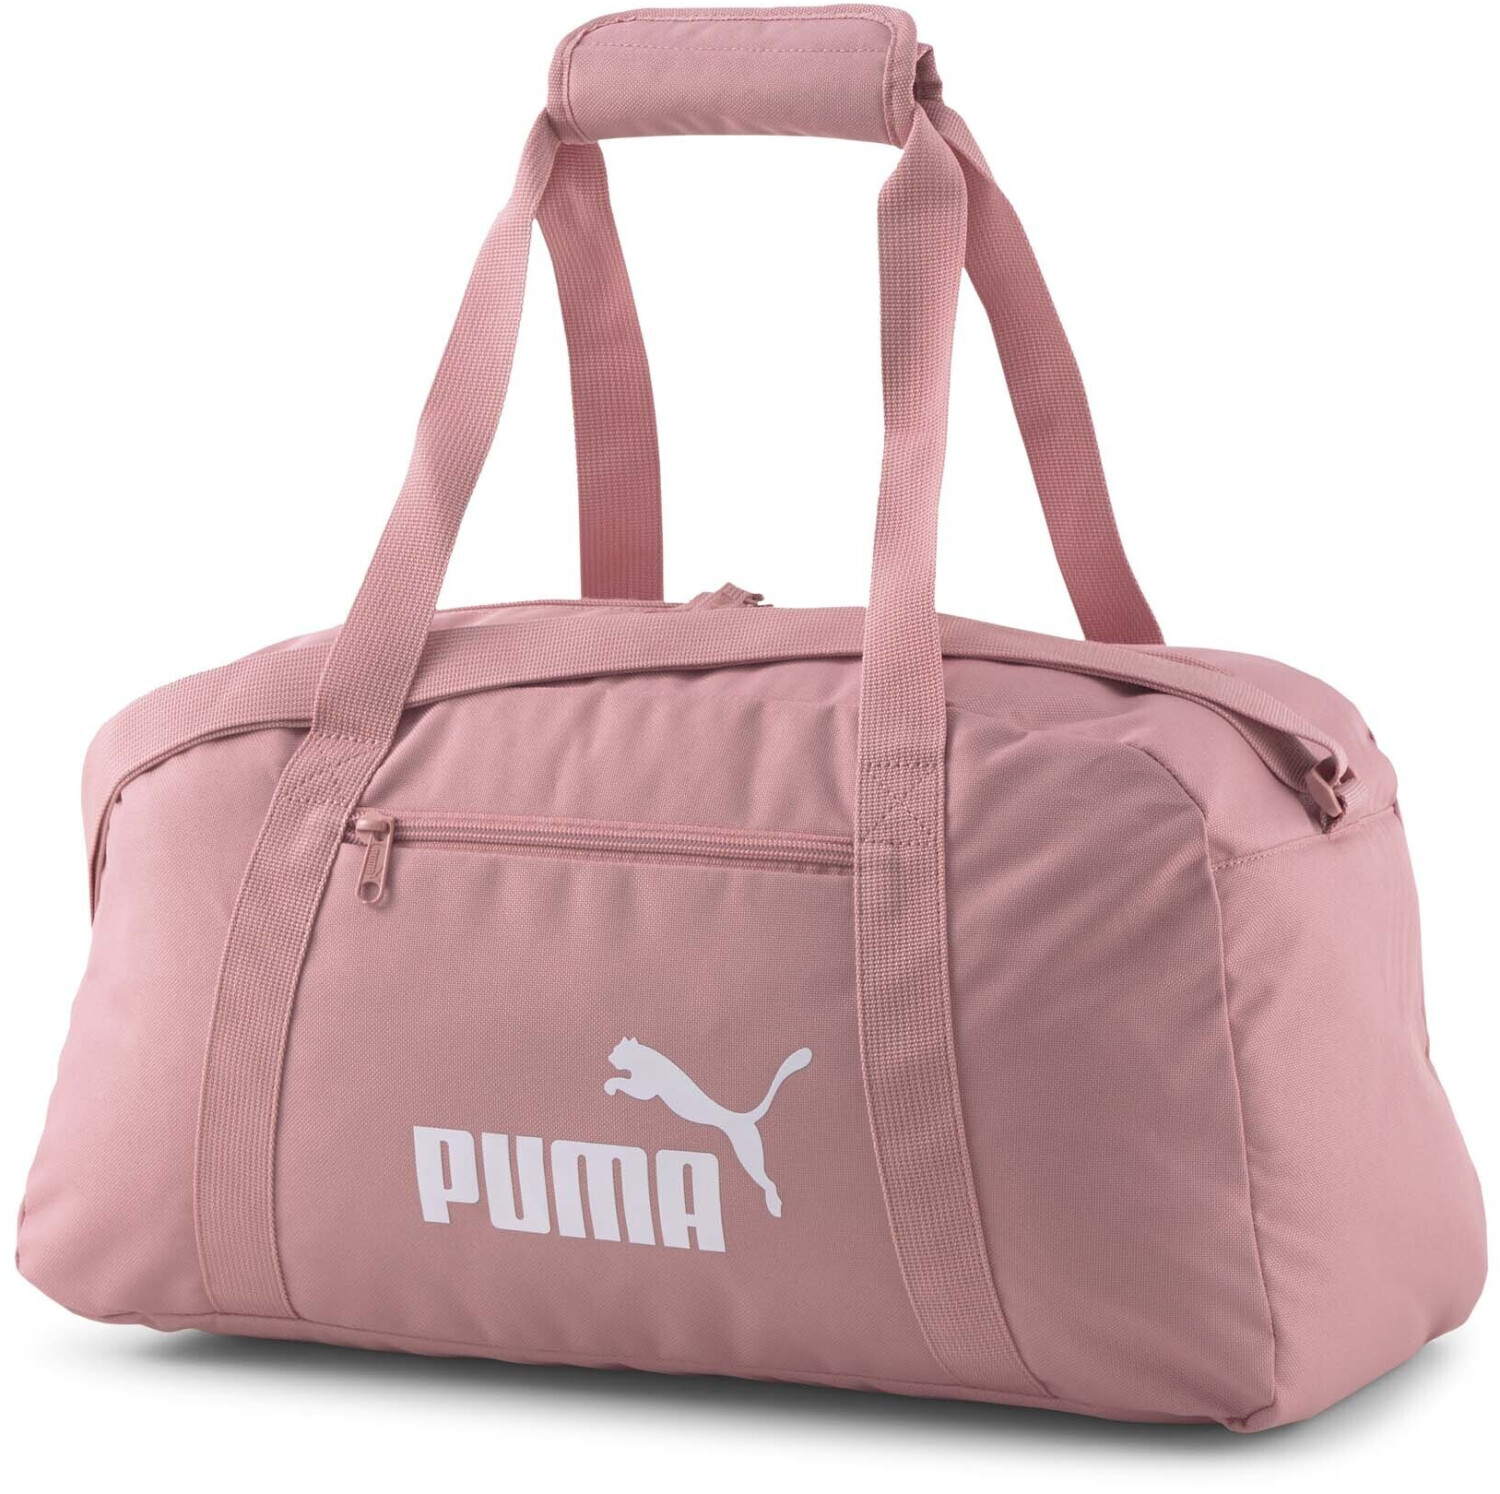 Puma Phase Sports Bag Preisvergleich € bei 21,76 ab 